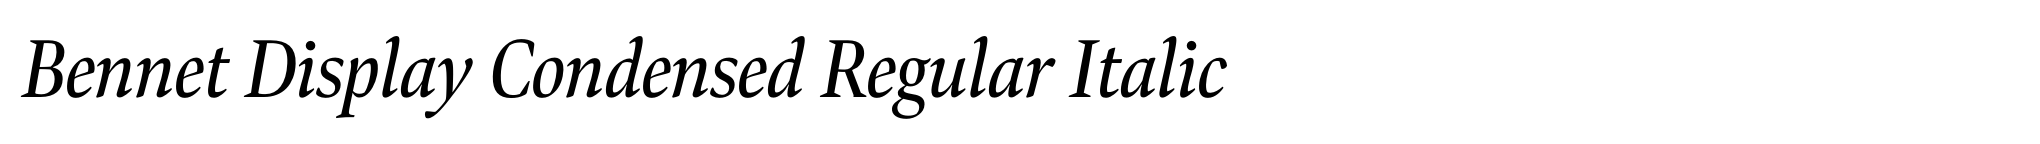 Bennet Display Condensed Regular Italic image